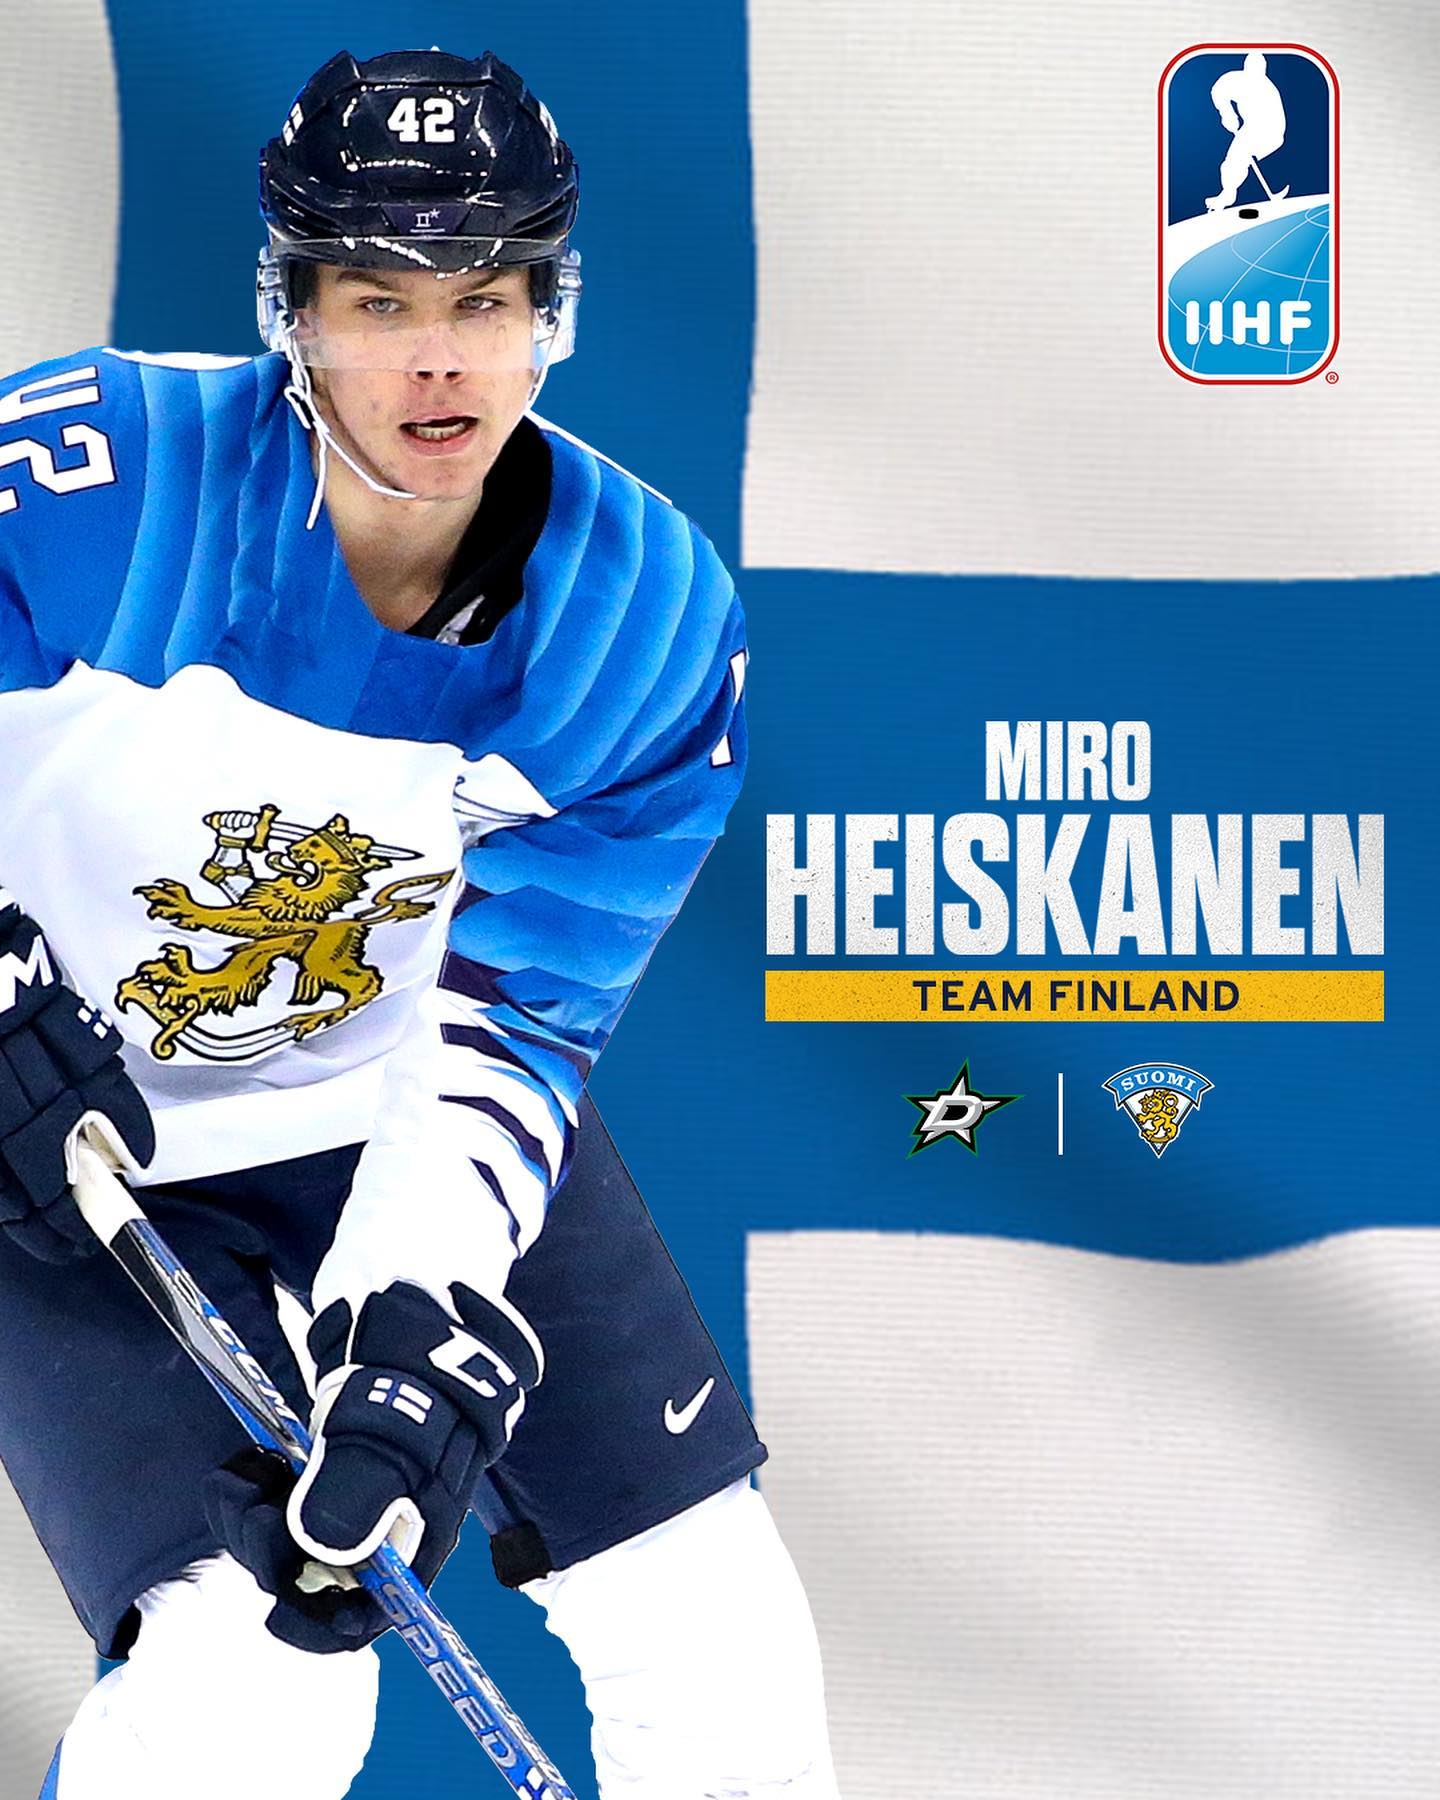 Miro Heiskanen, Esa Lindell, and Team Finland go for Gold at #IIHFWorlds  Watc...